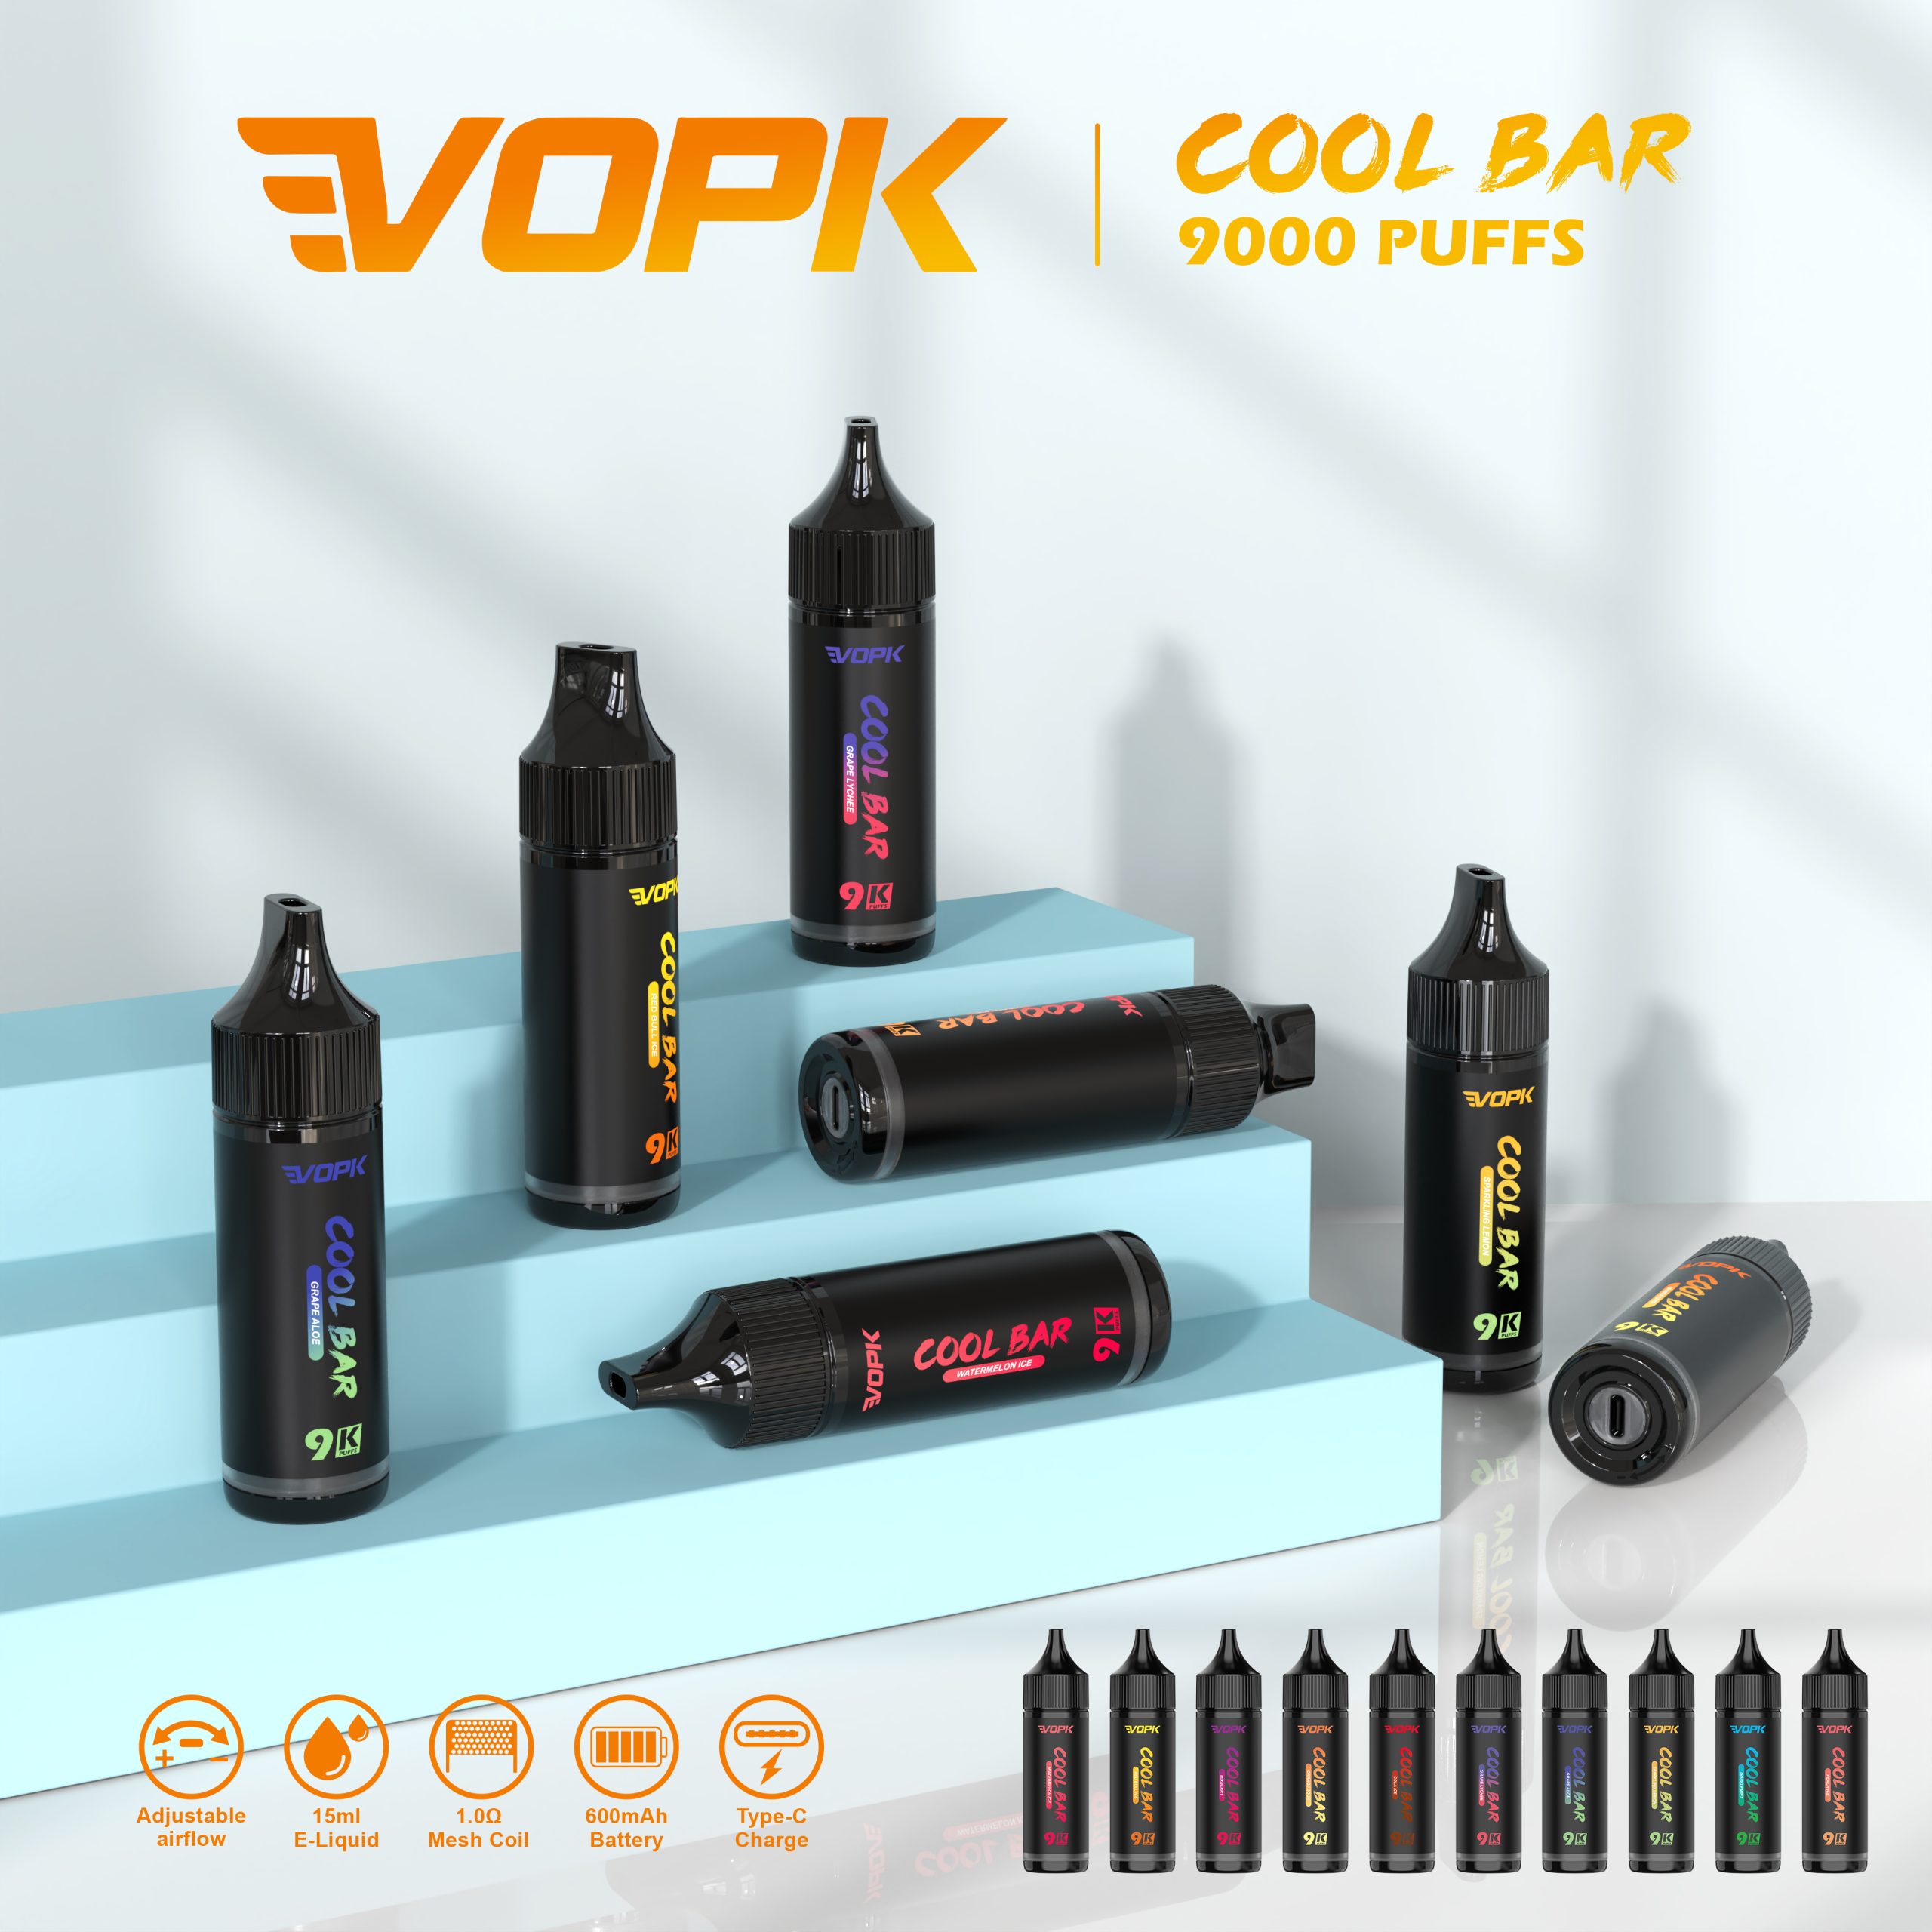 VOPK cool bar 9000 Disposable Vape